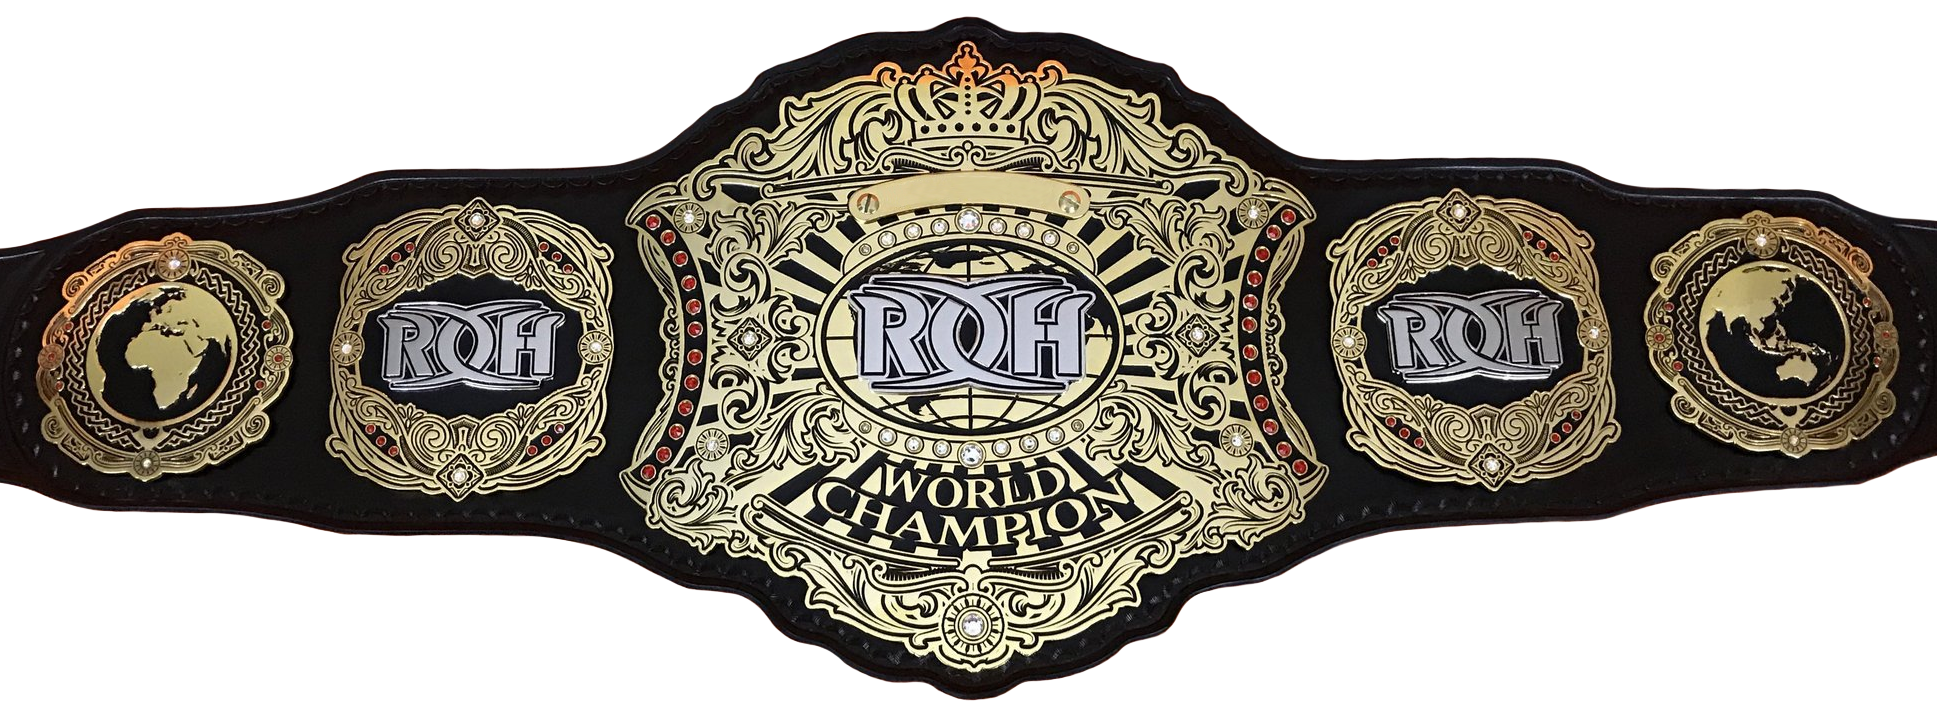 ROH World Champion